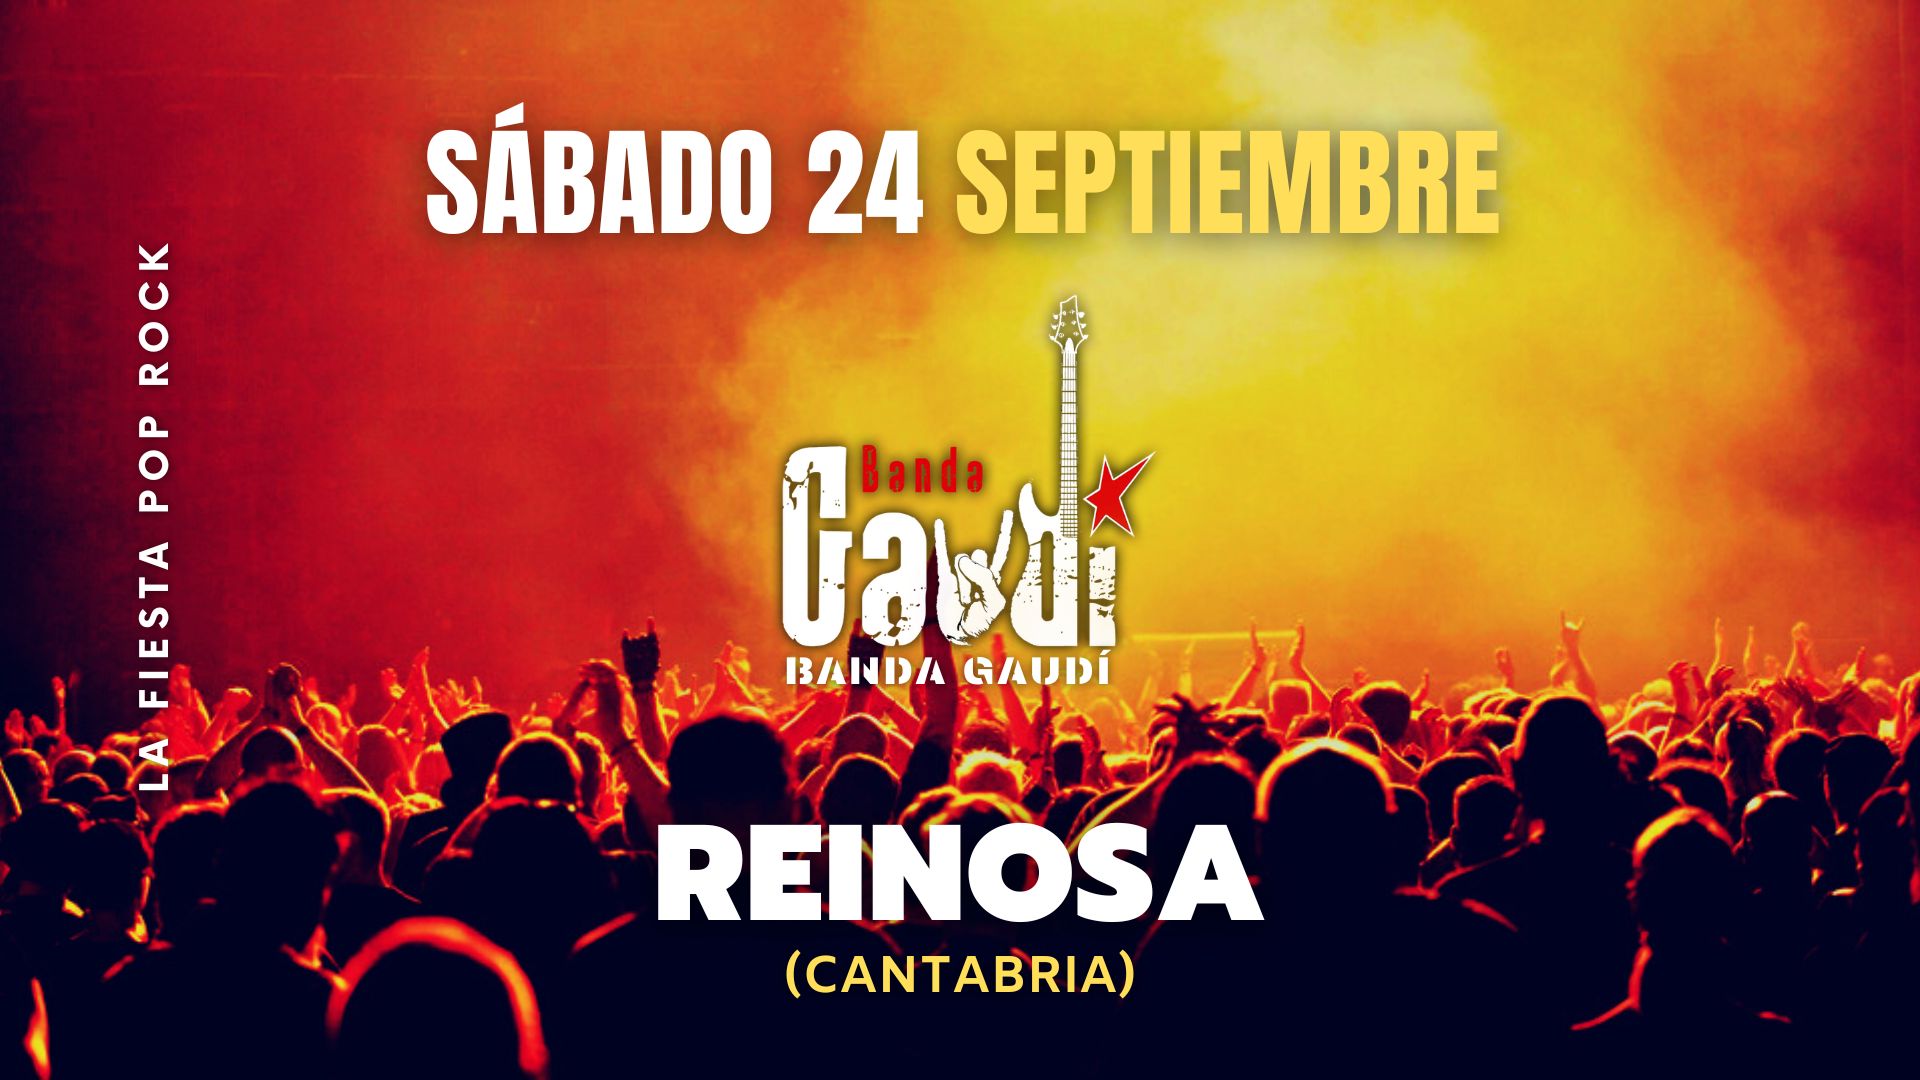 En este momento estás viendo Fiestas de San Mateo en REINOSA (Cantabria) 2022 – Sábado 24 Septiembre grupo BANDA GAUDÍ + Orquesta KUBO